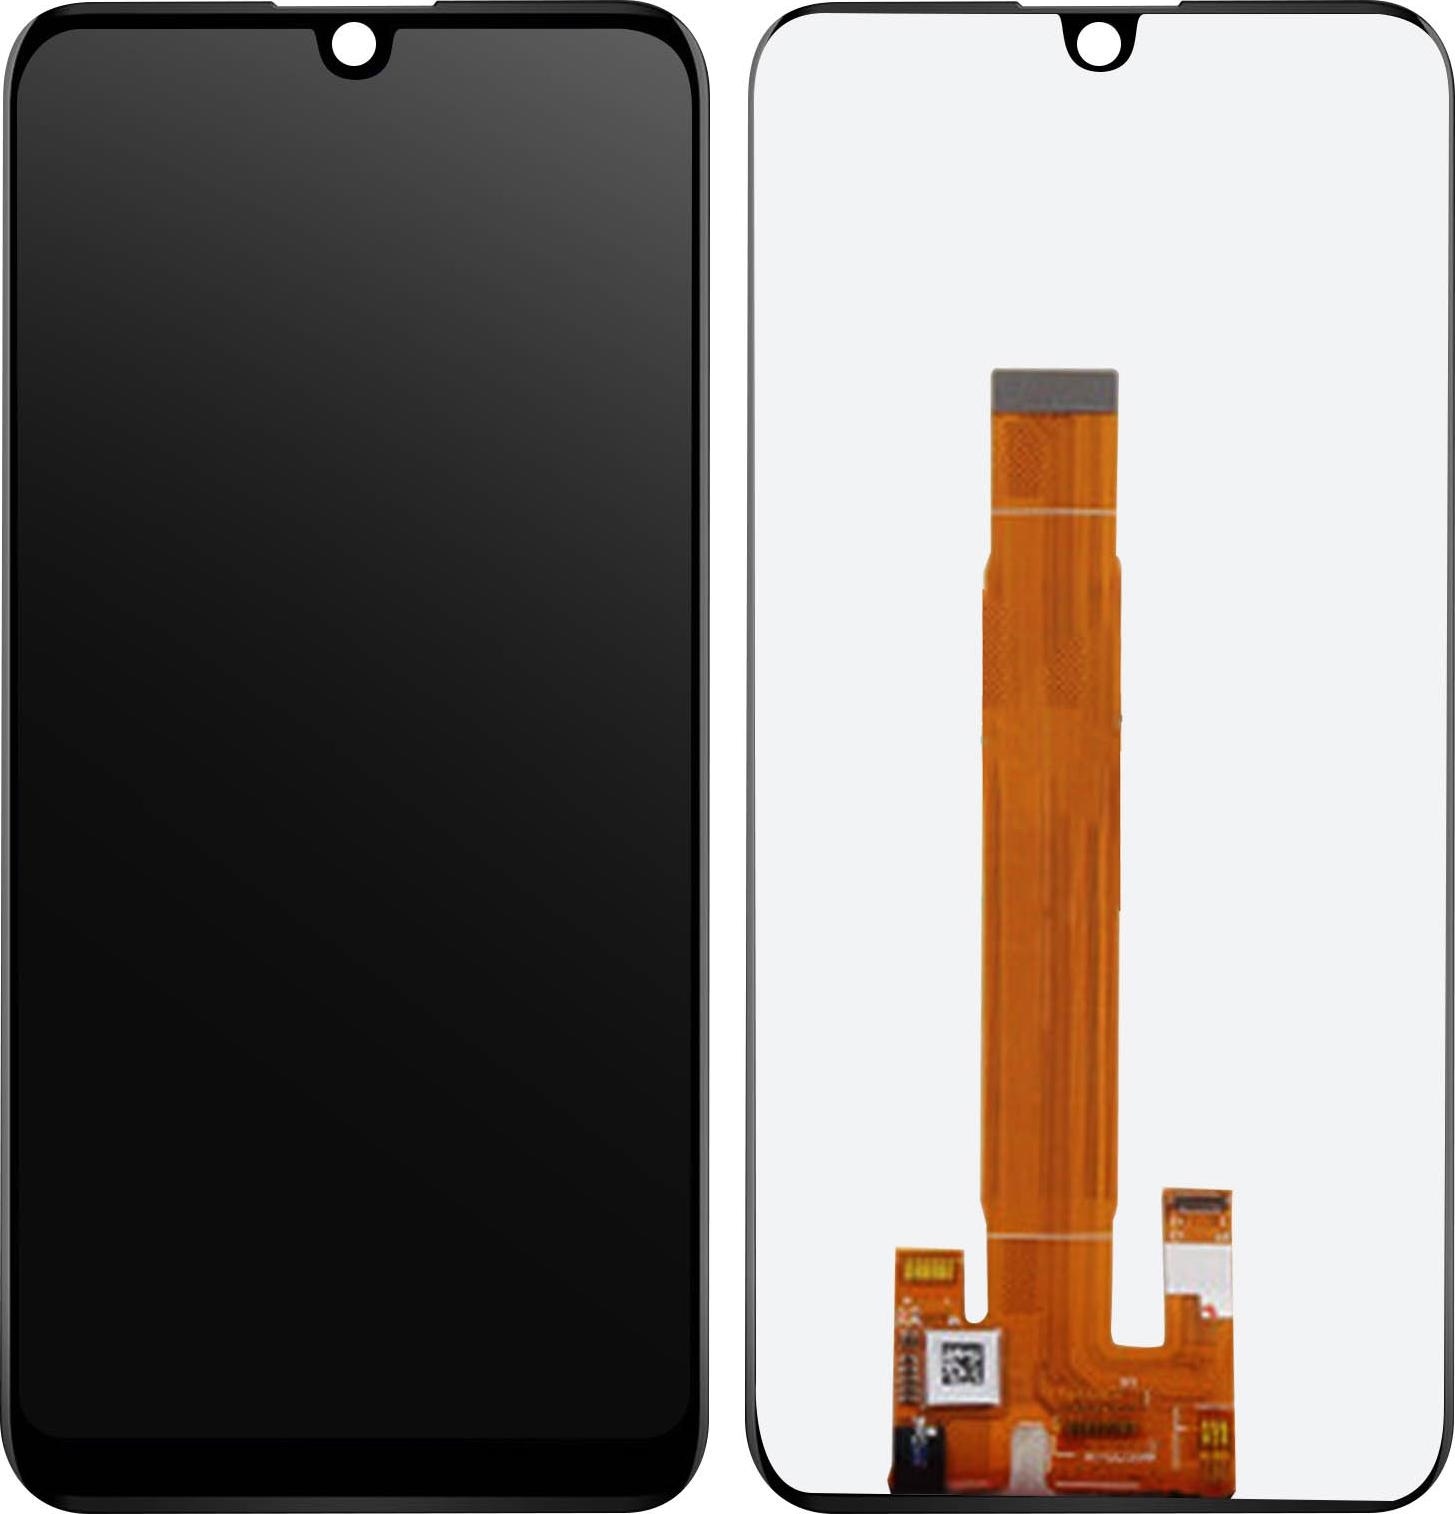 Wiko LCD-Display Wiko View 3 Lite (Wiko View 3 Lite), Mobilgerät Ersatzteile, Schwarz